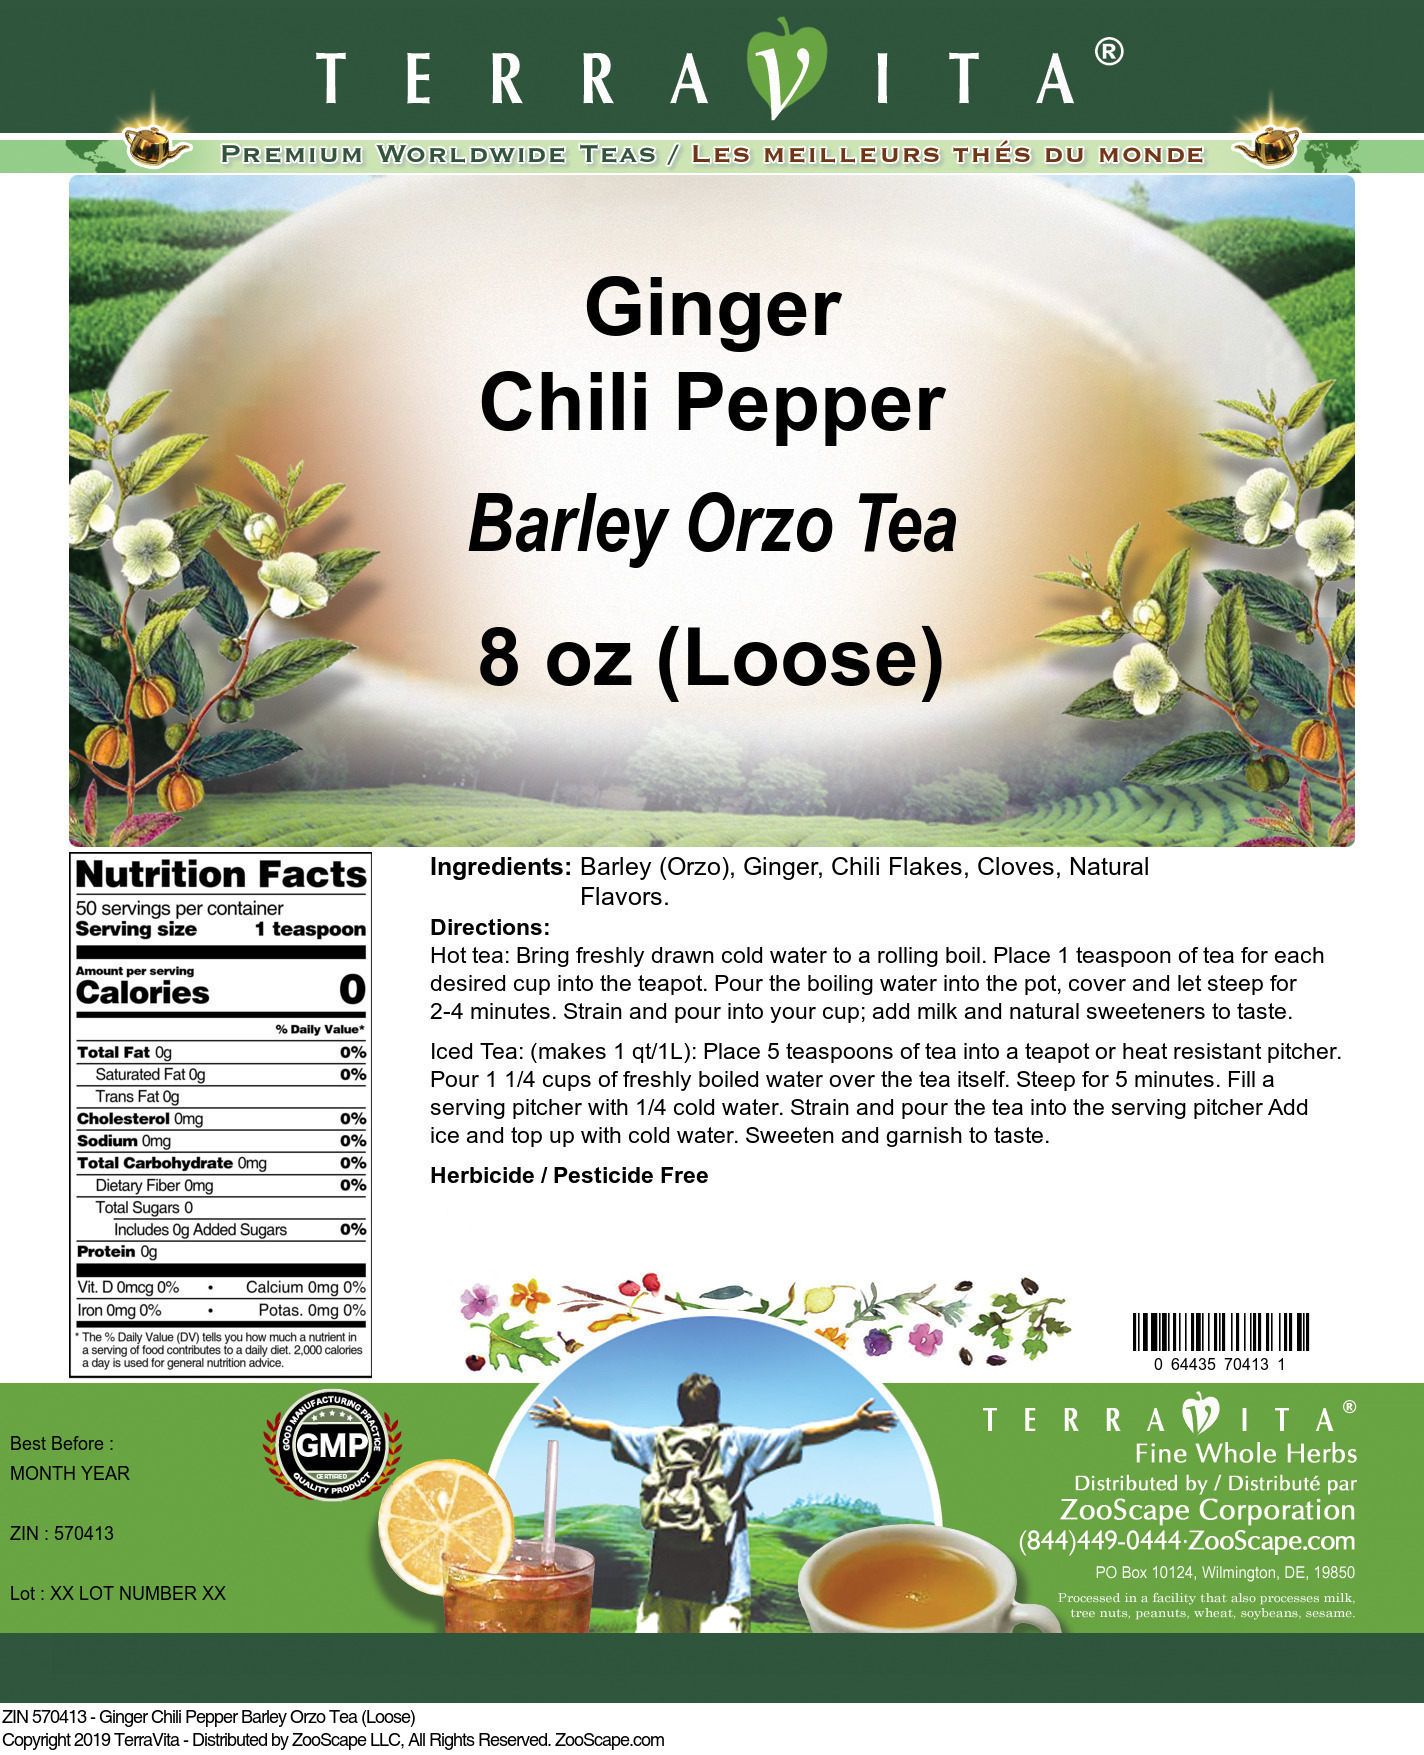 Ginger Chili Pepper Barley Orzo Tea (Loose) - Label